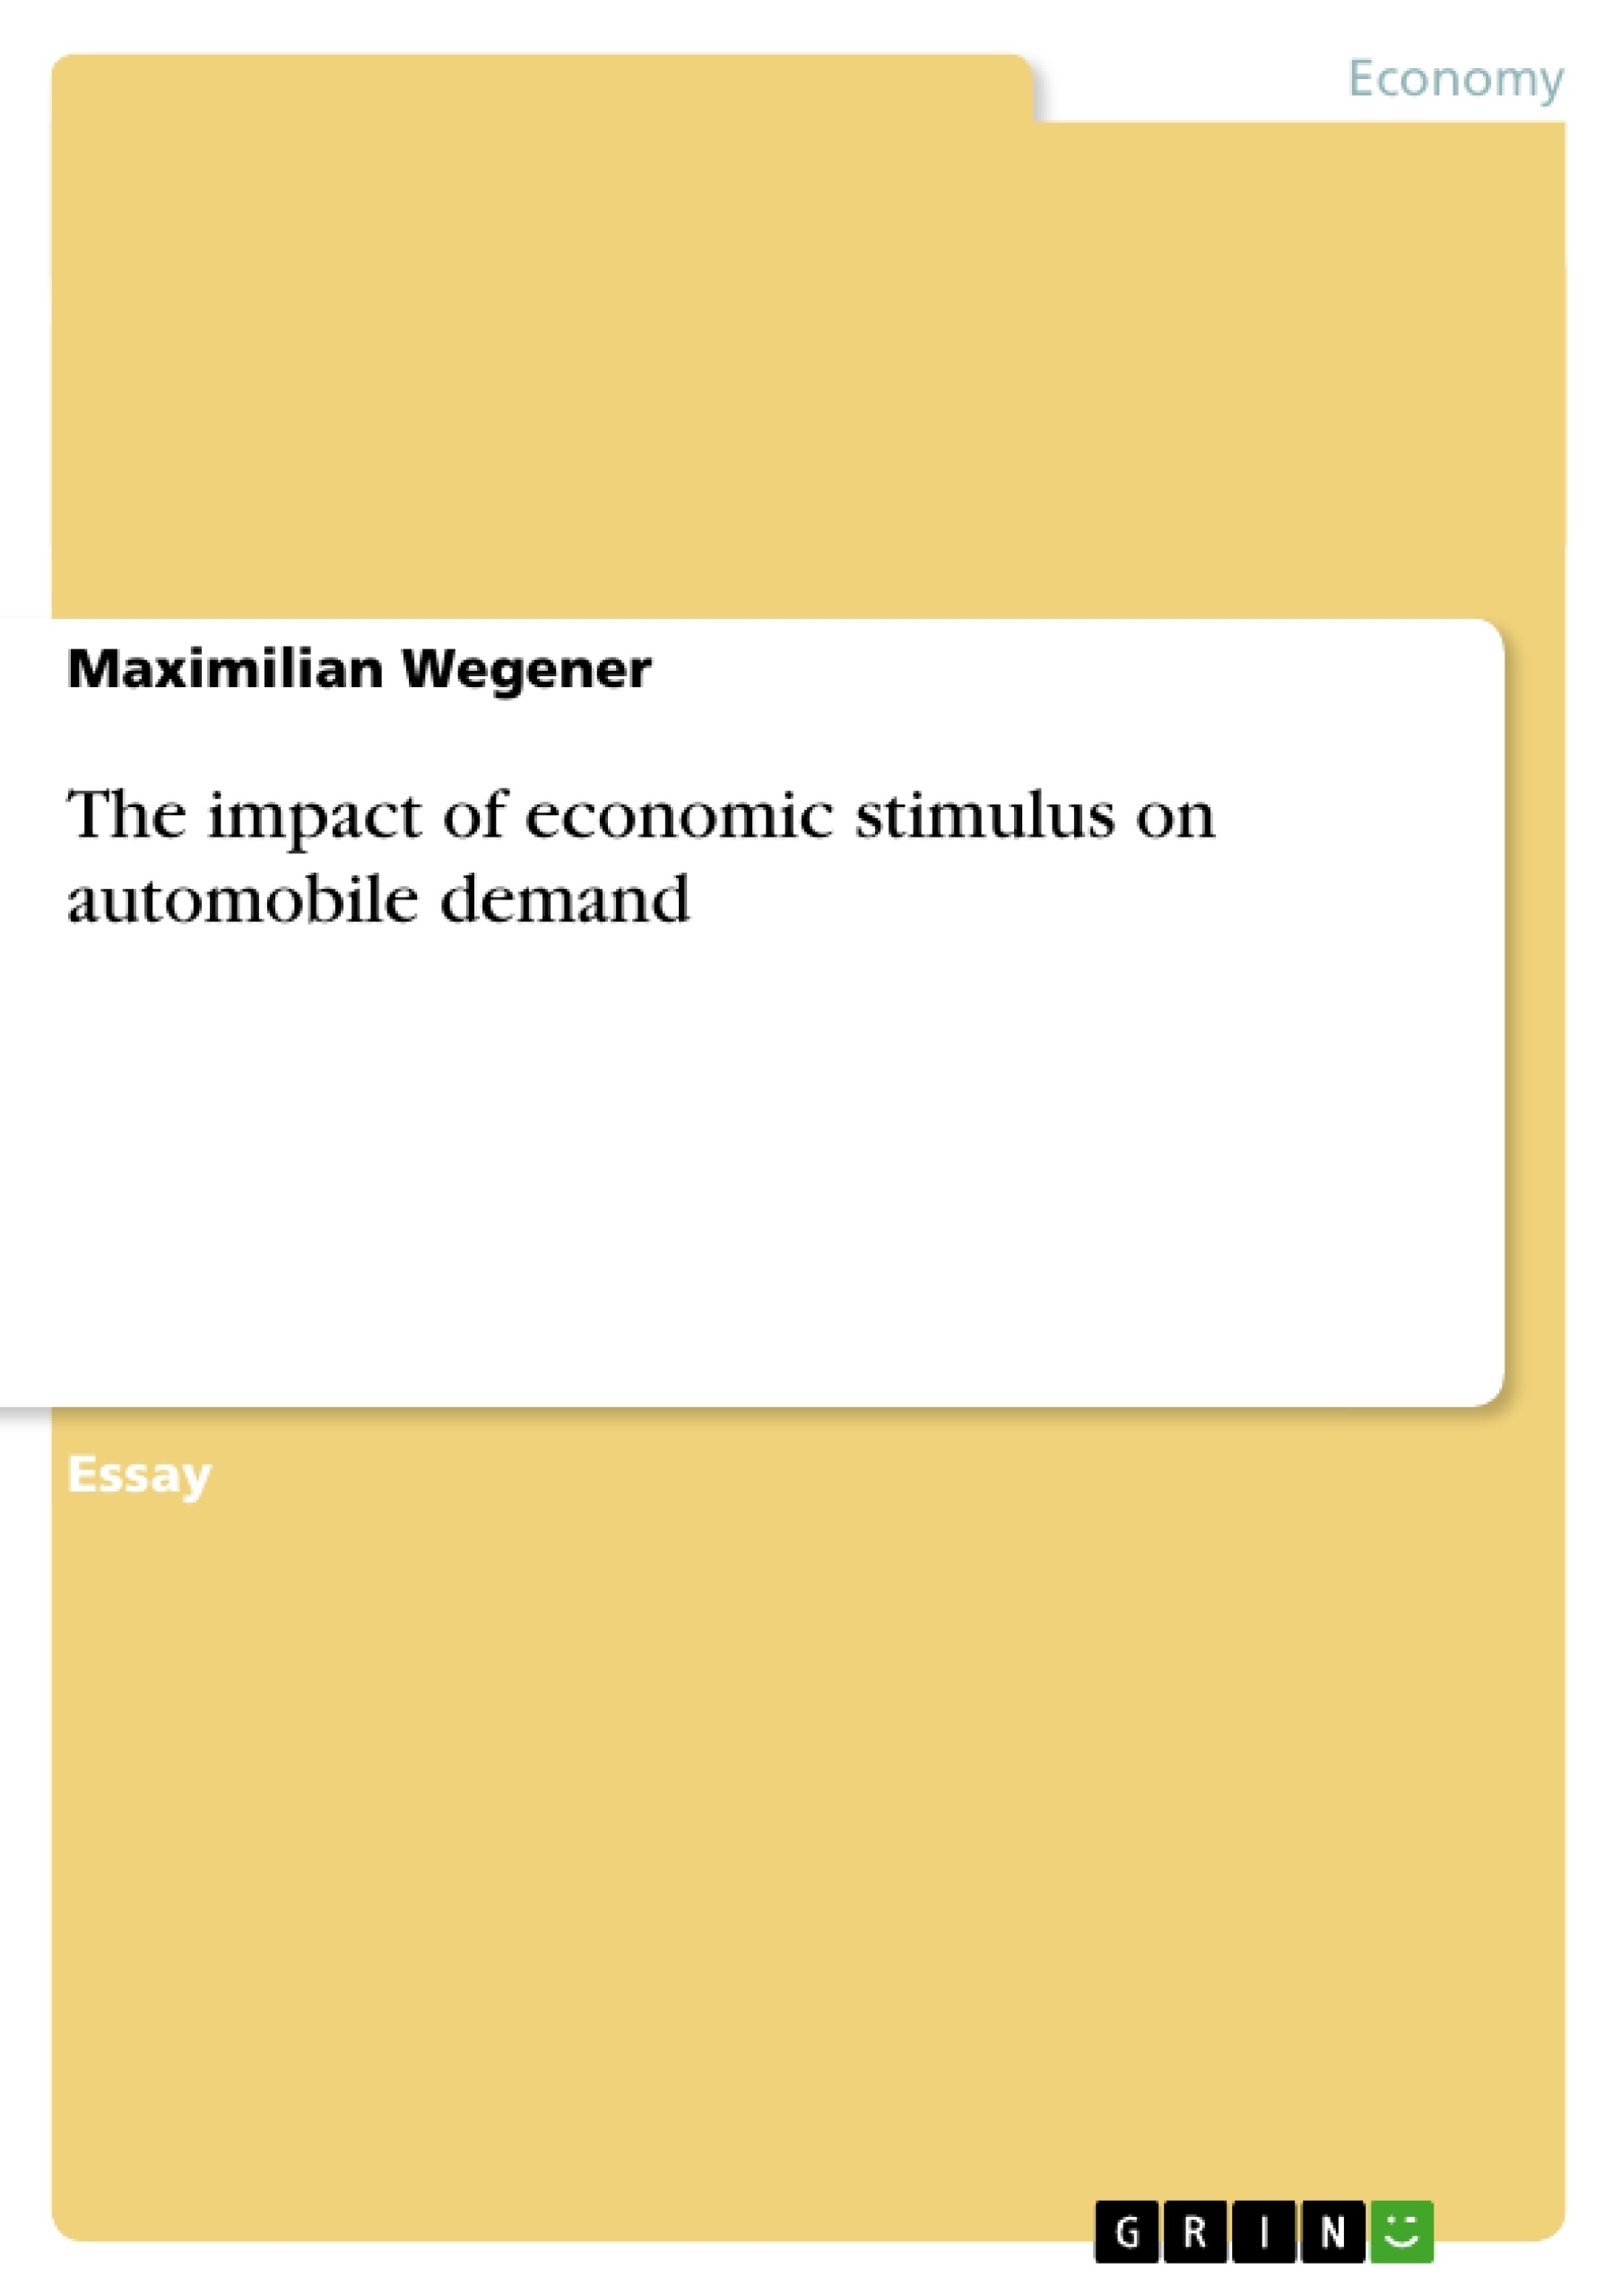 Title: The impact of economic stimulus on automobile demand